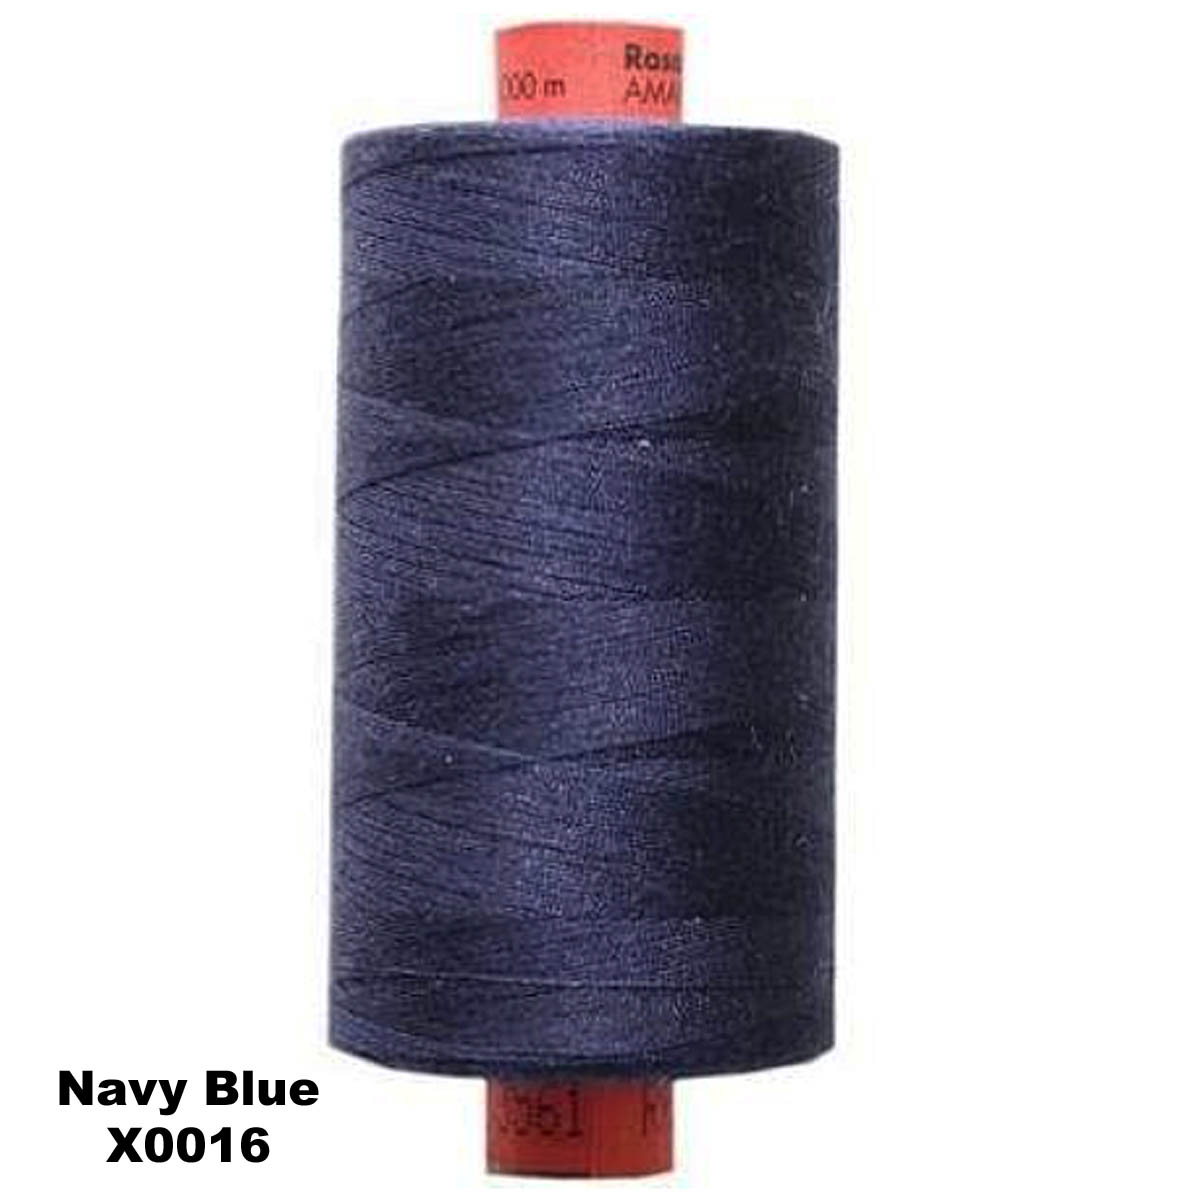 RASANT 120 R76 THREAD 1000m (1094yd) 42w Cotton/Poly Core (choose colour)